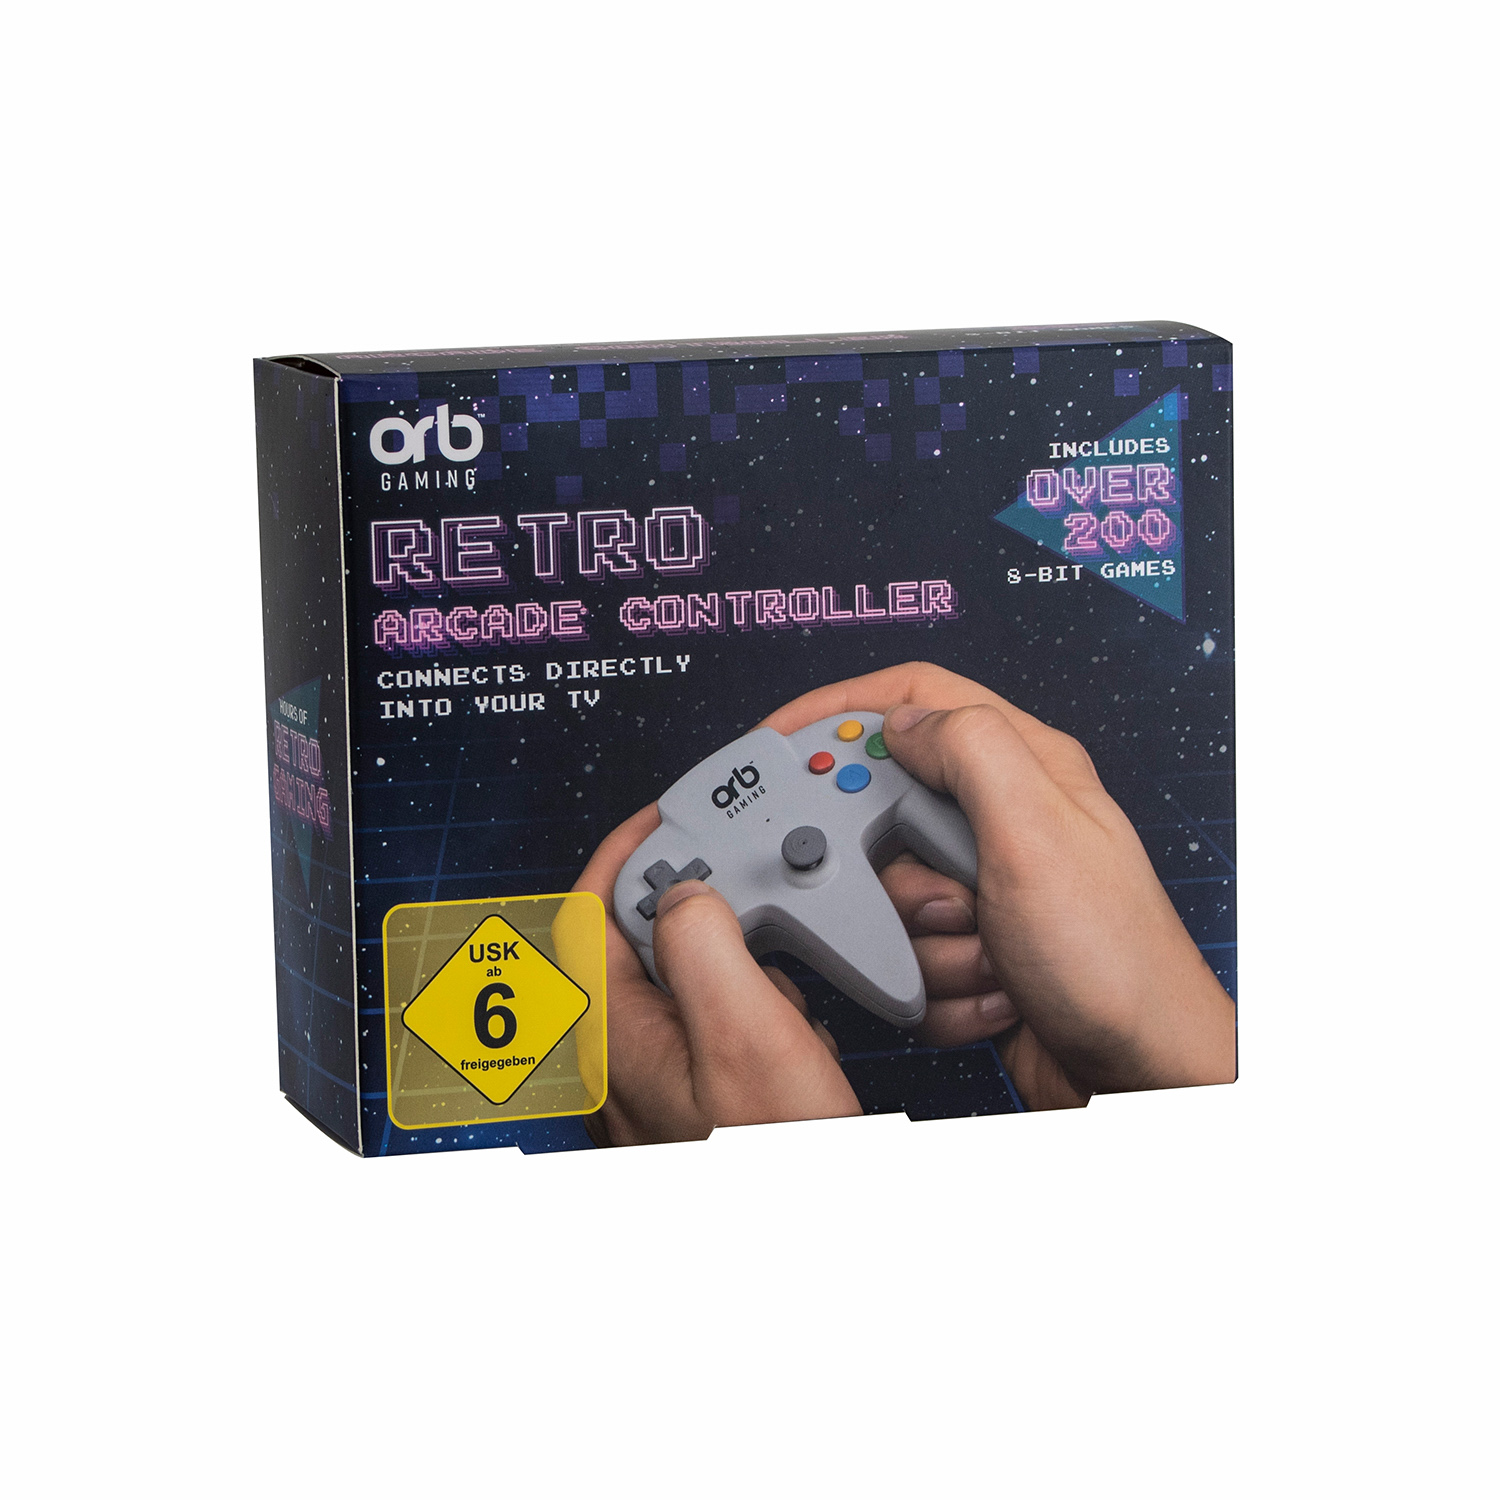 ORB Retro Arcade grau TV Spielen 8-bit 200x Controller Games -inkl